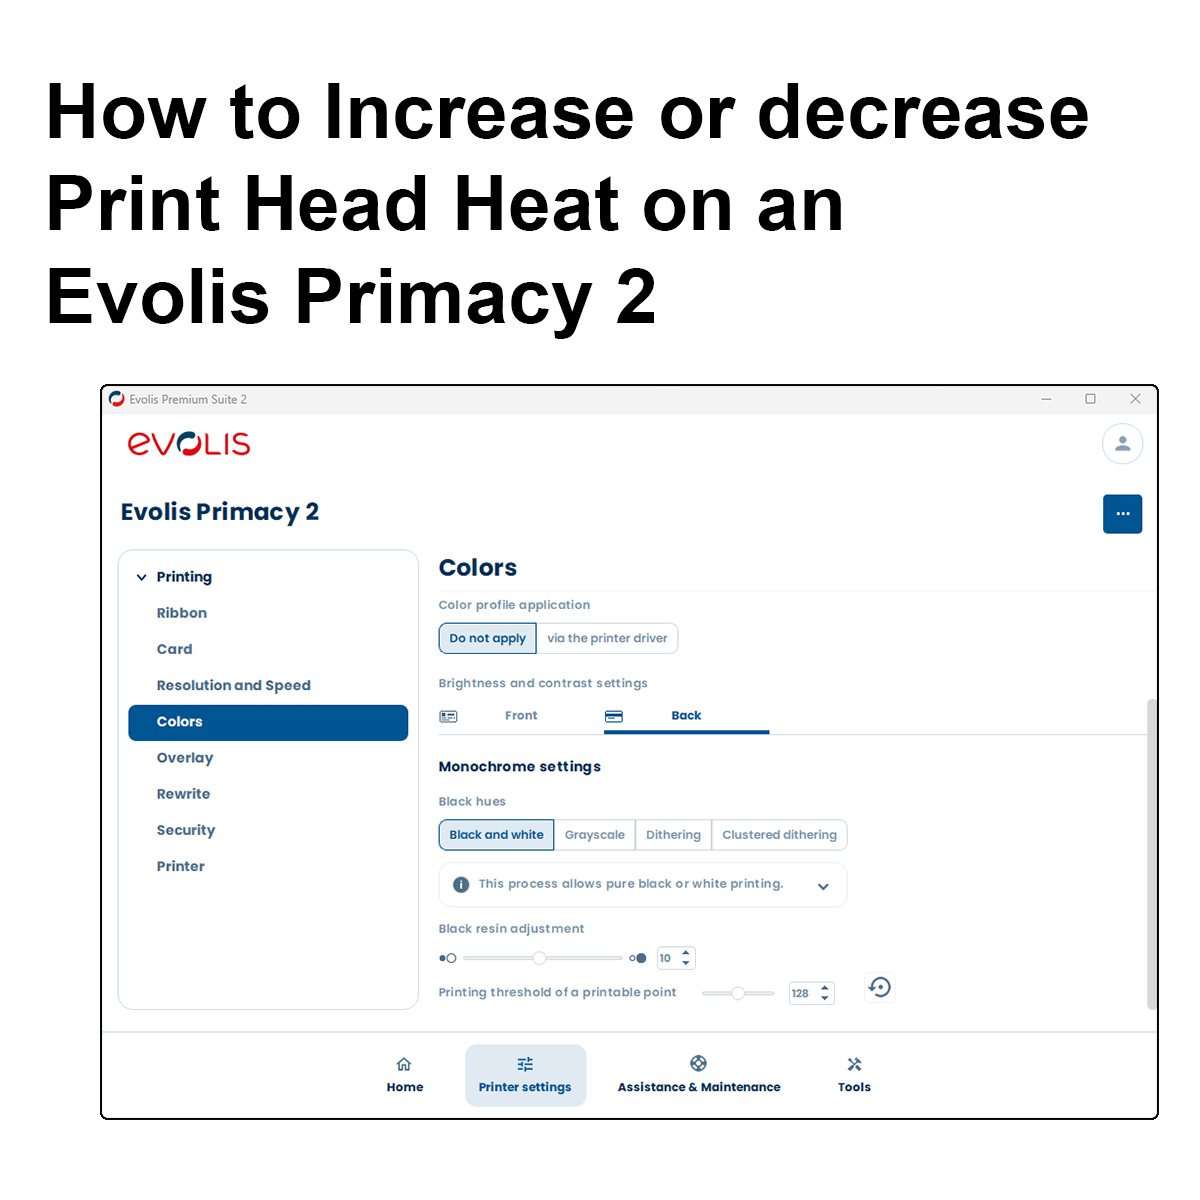 How to Increase or decrease Print Head Heat on an Evolis Primacy 2